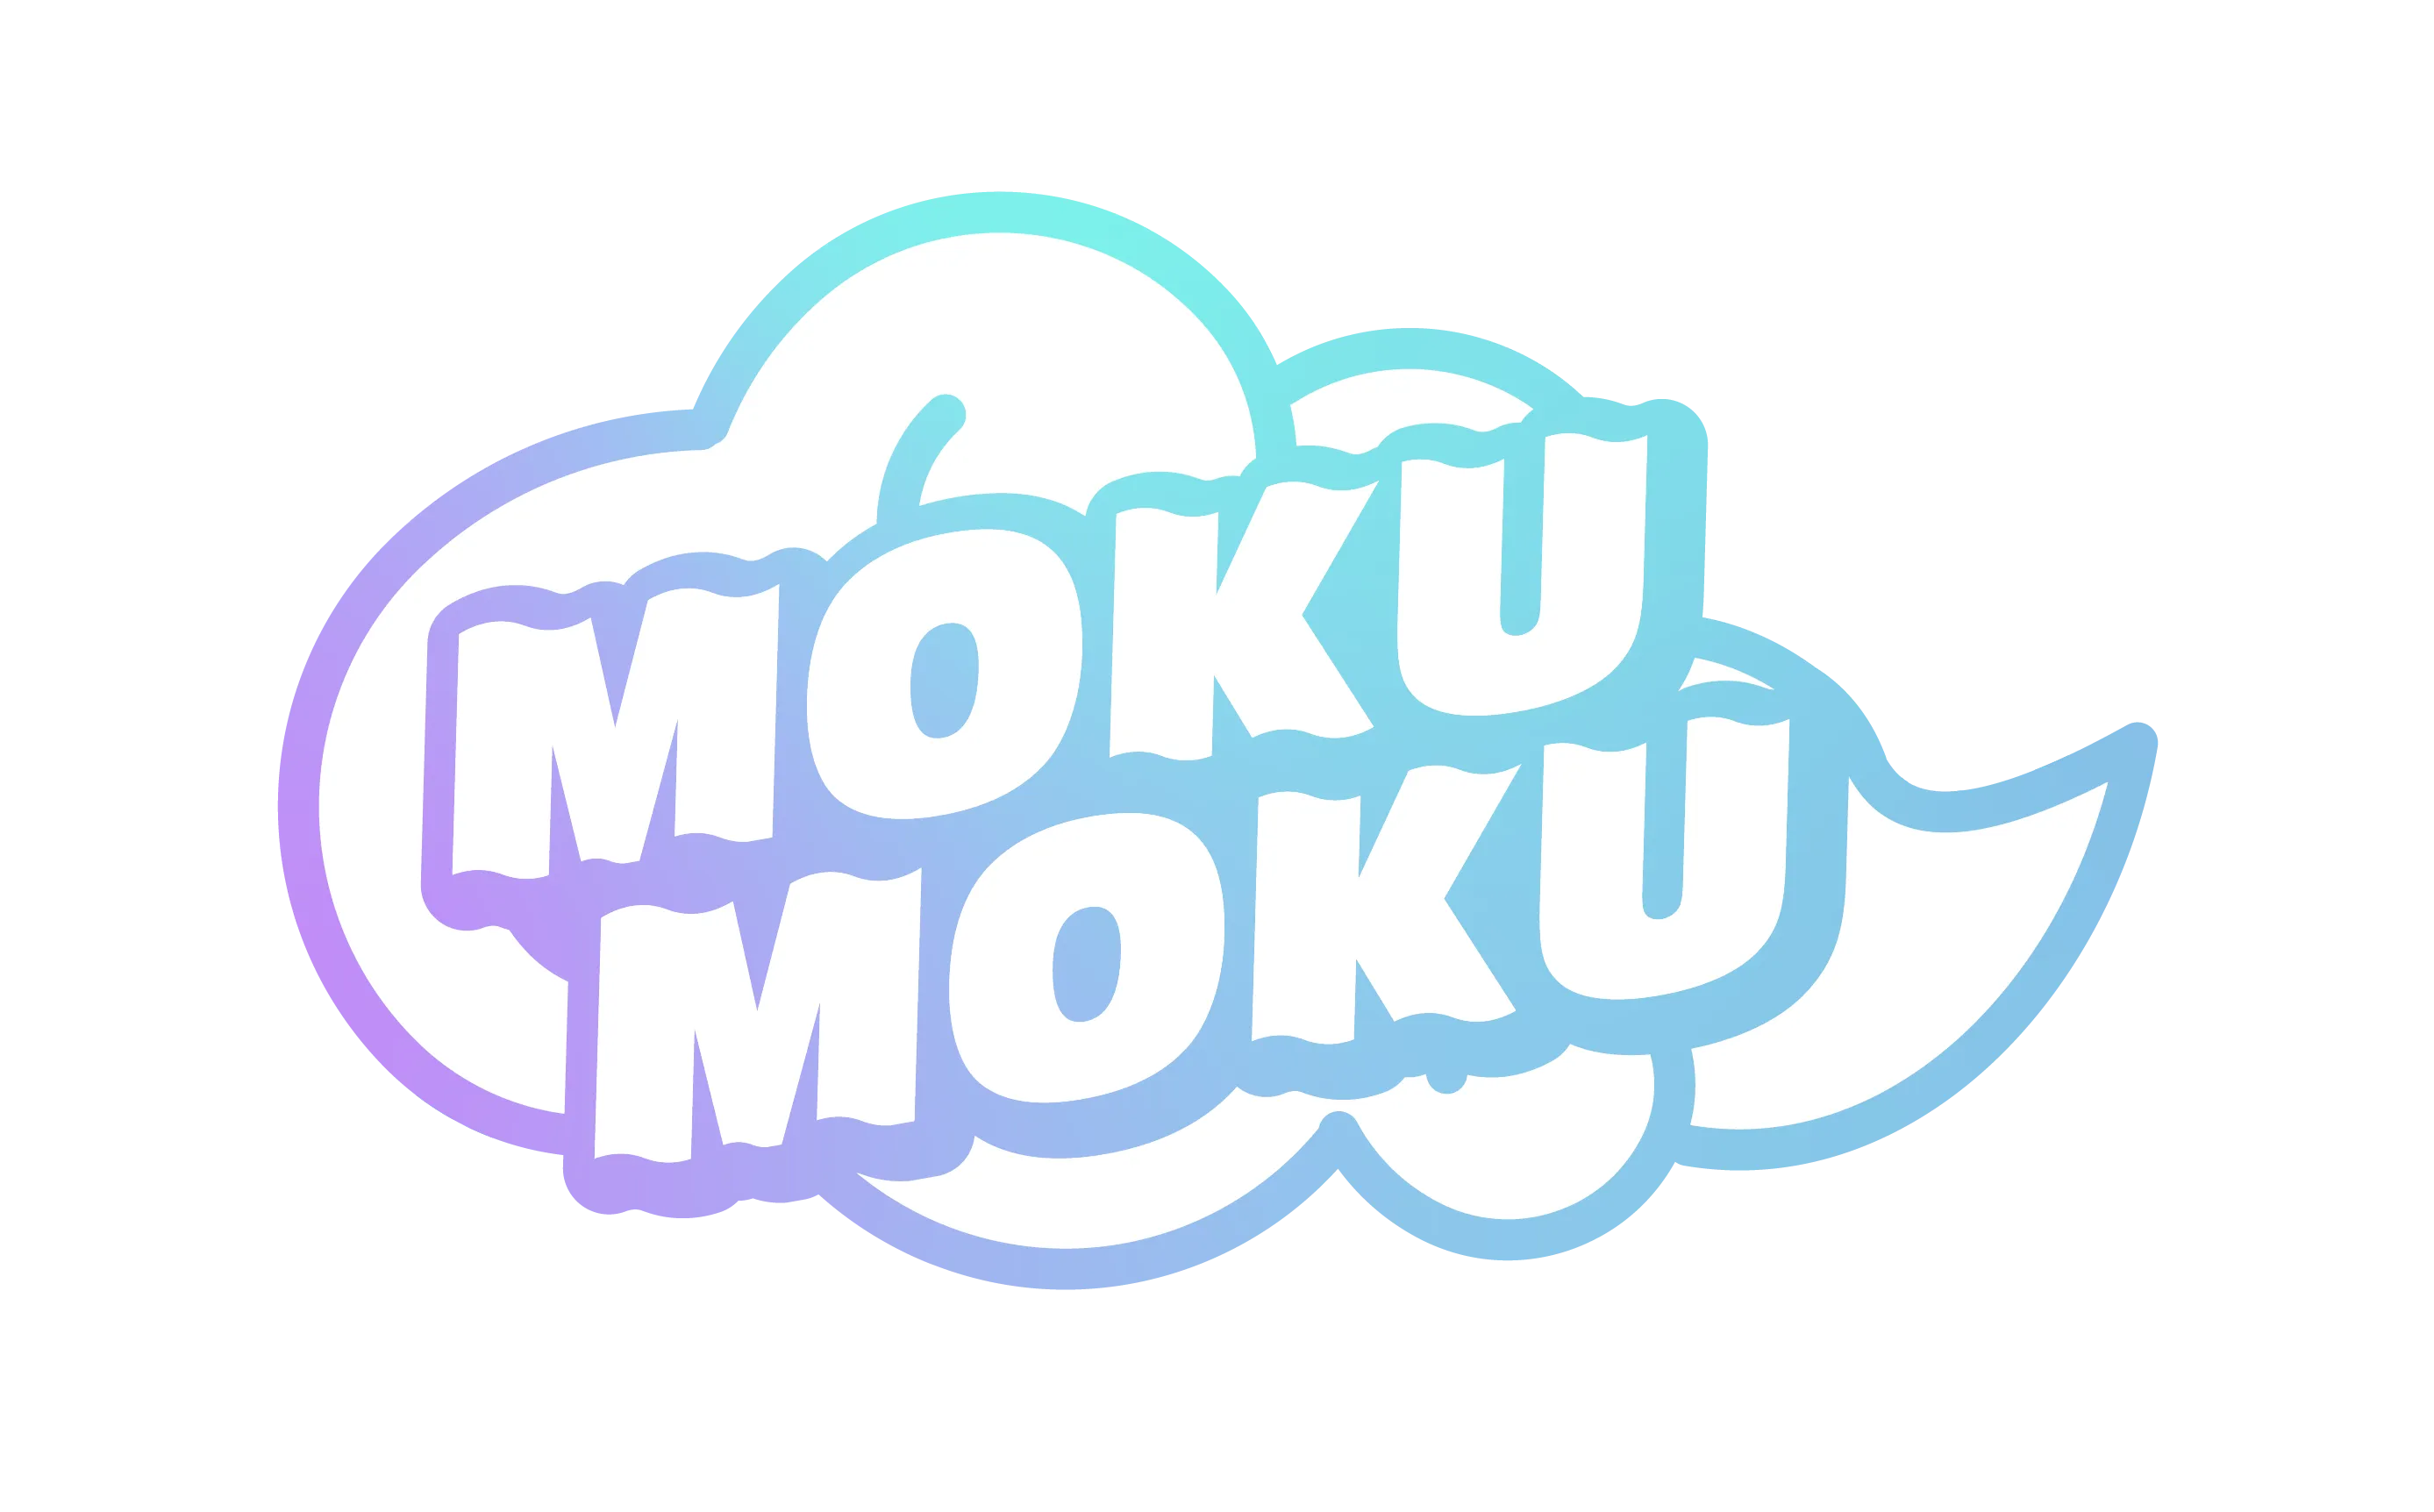 MOKUMOKU